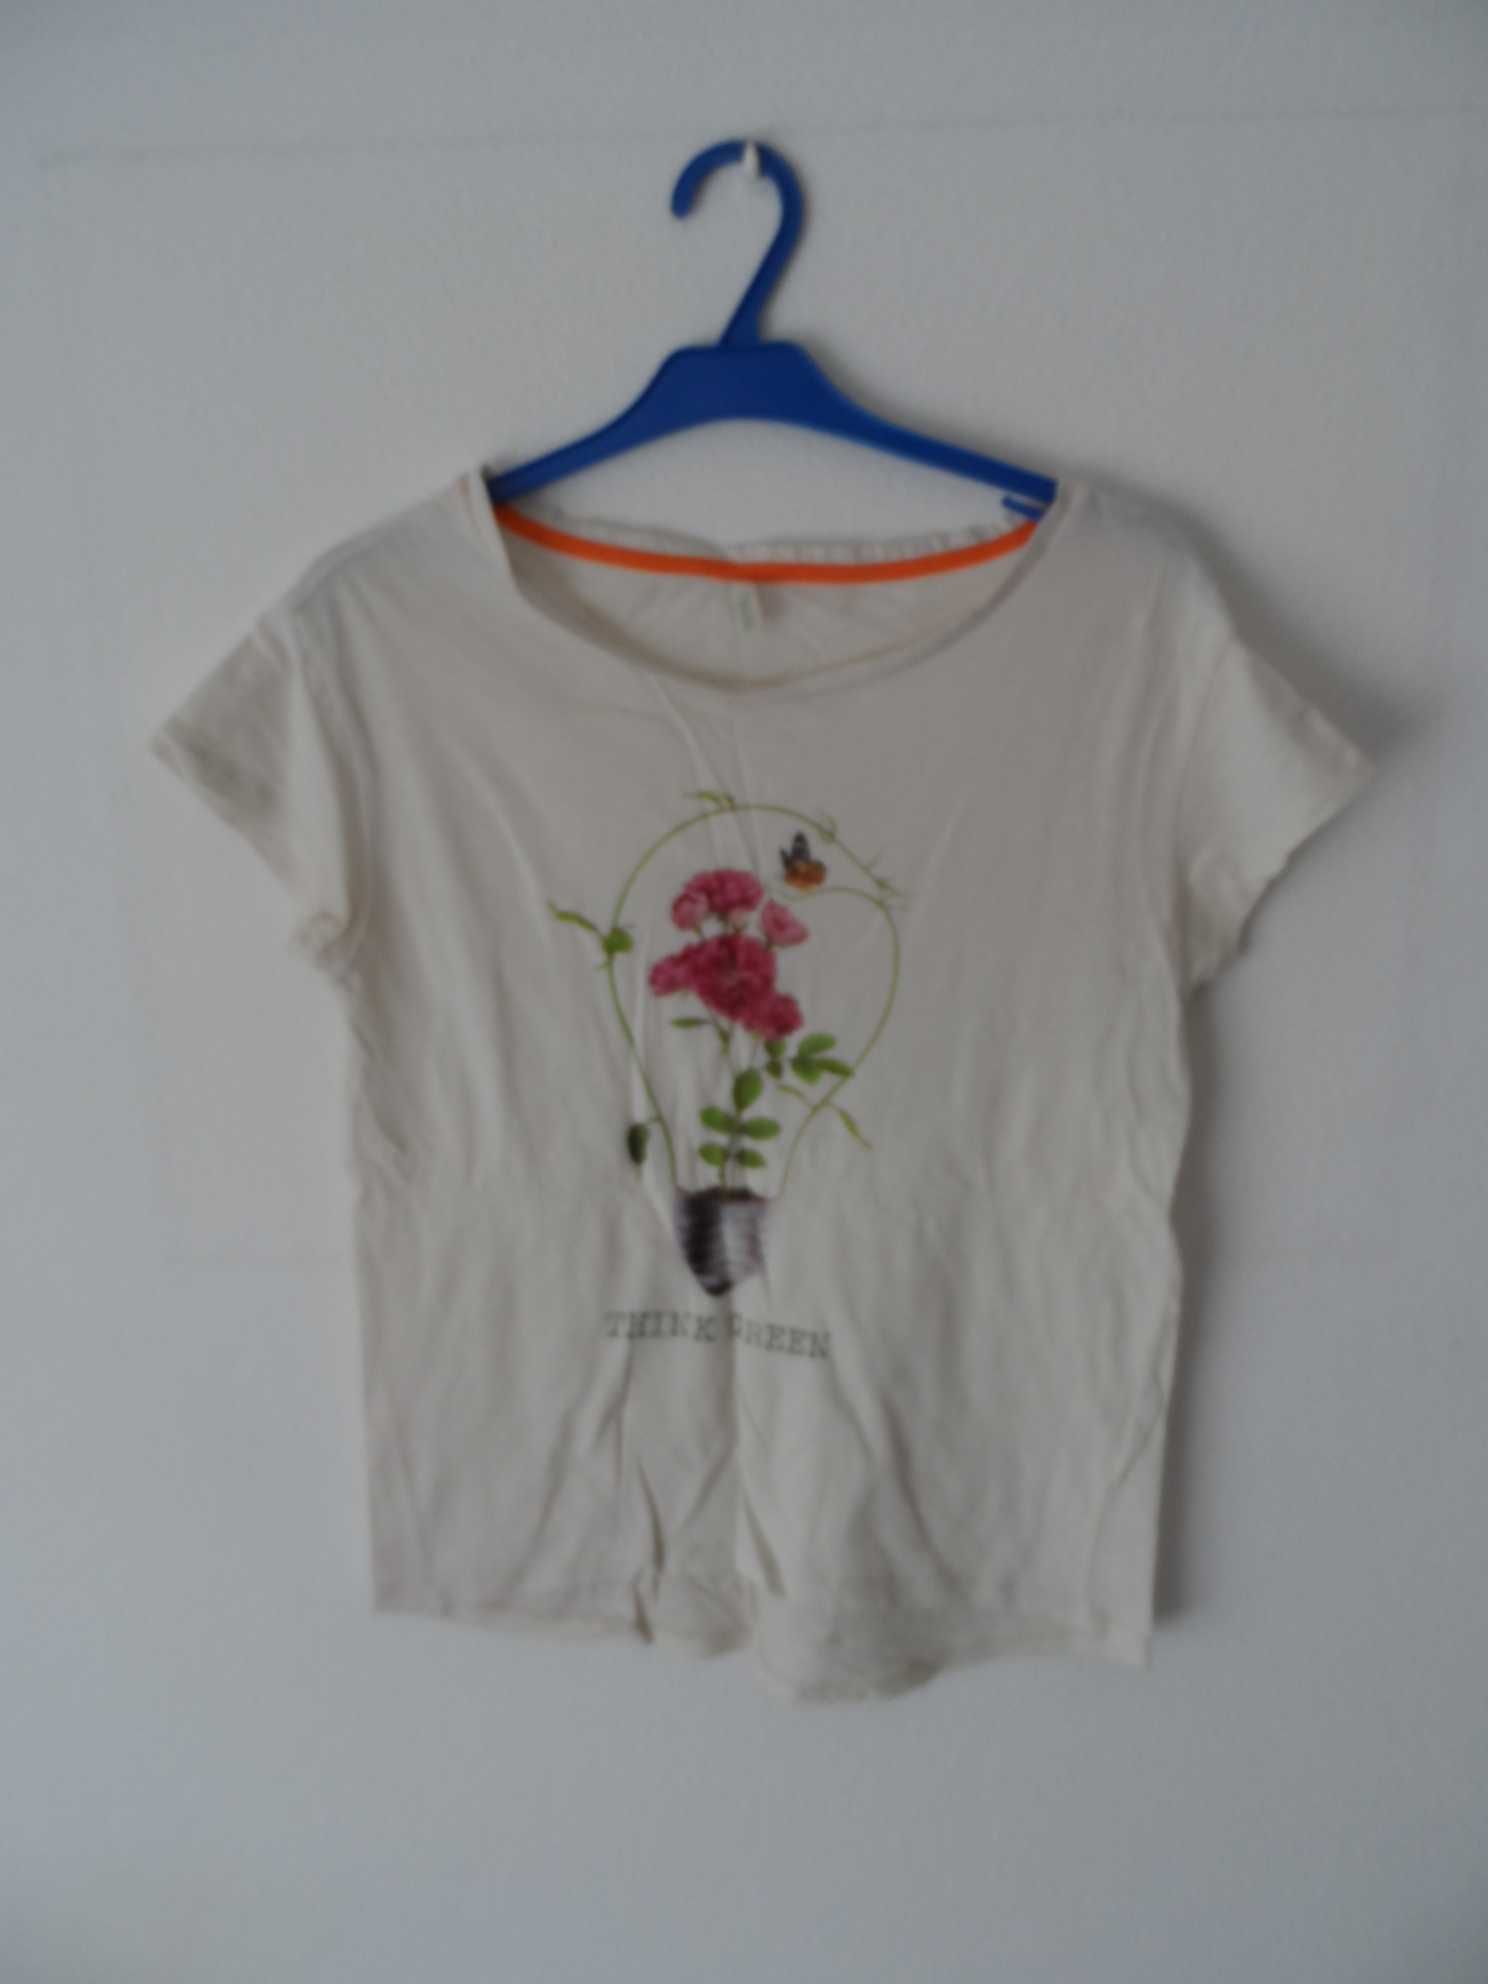 T-shirt pérola floral (Benetton)